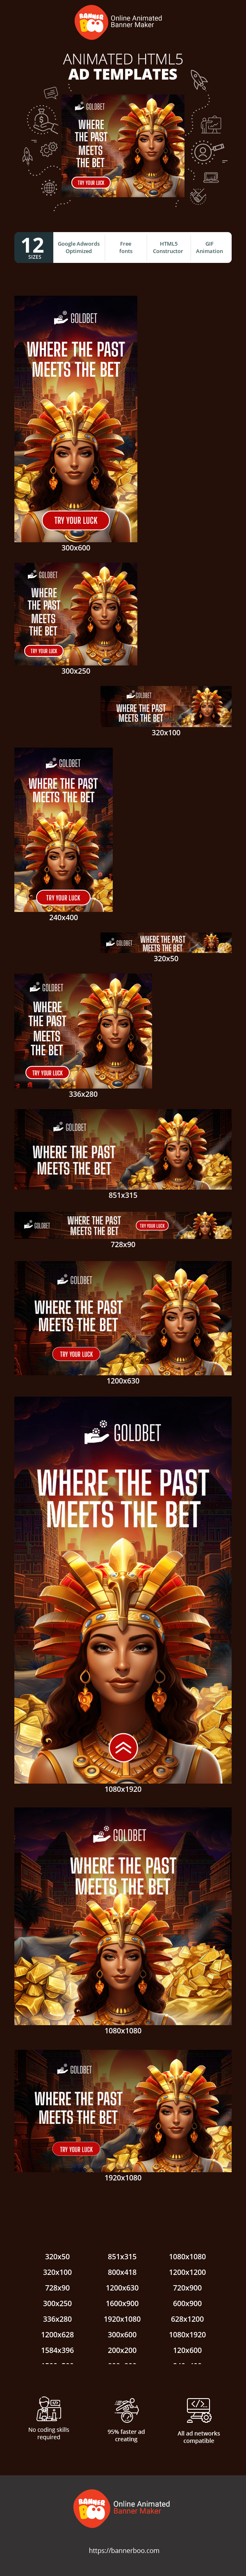 Szablon reklamy banerowej — Where the Past Meets the Bet — Gambling